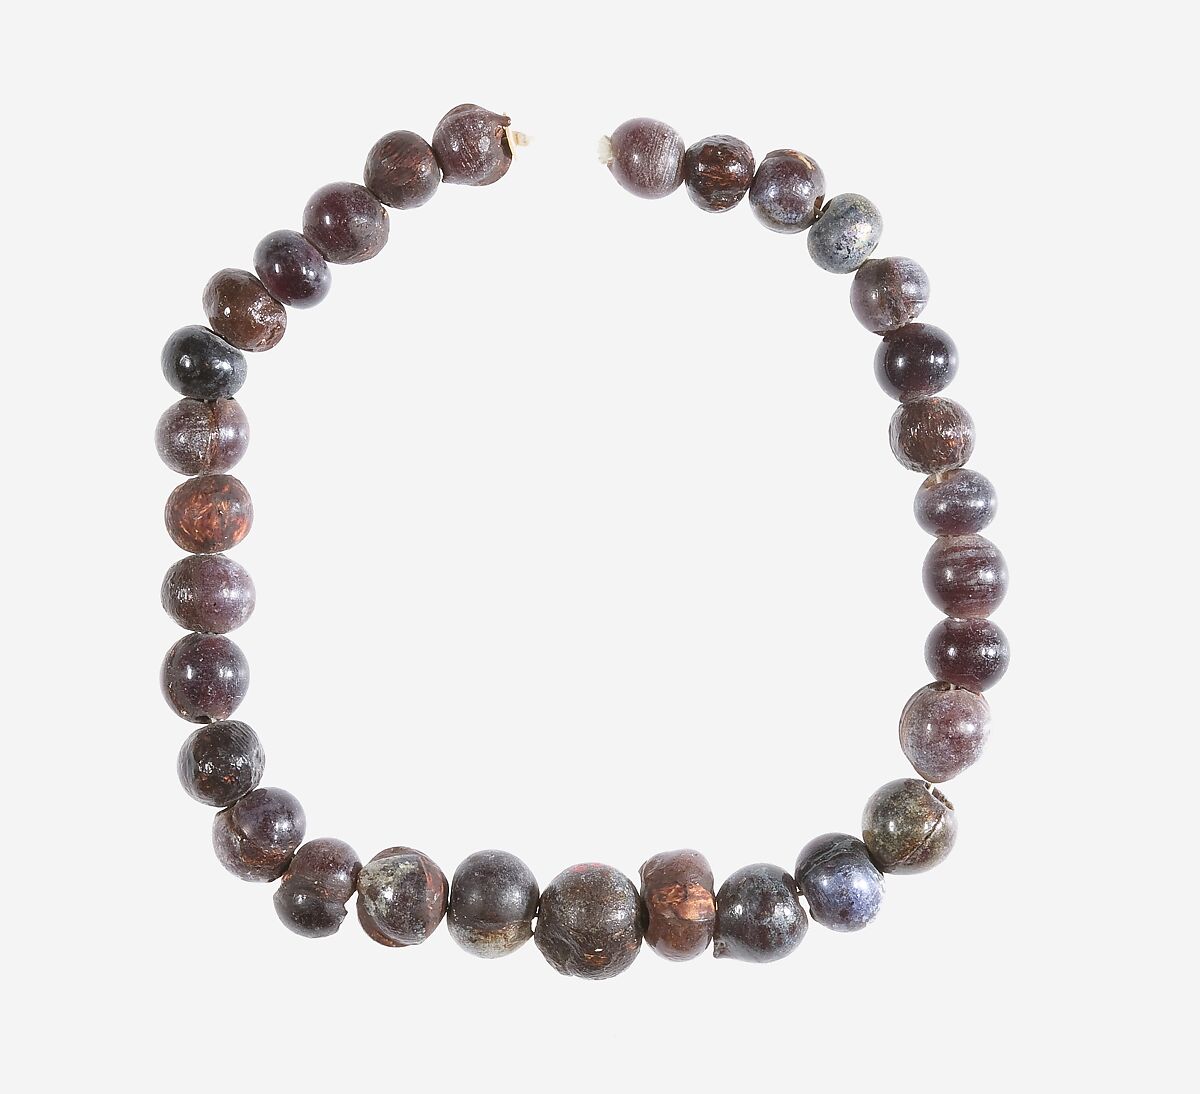 String of Ball Beads | New Kingdom | The Metropolitan Museum of Art